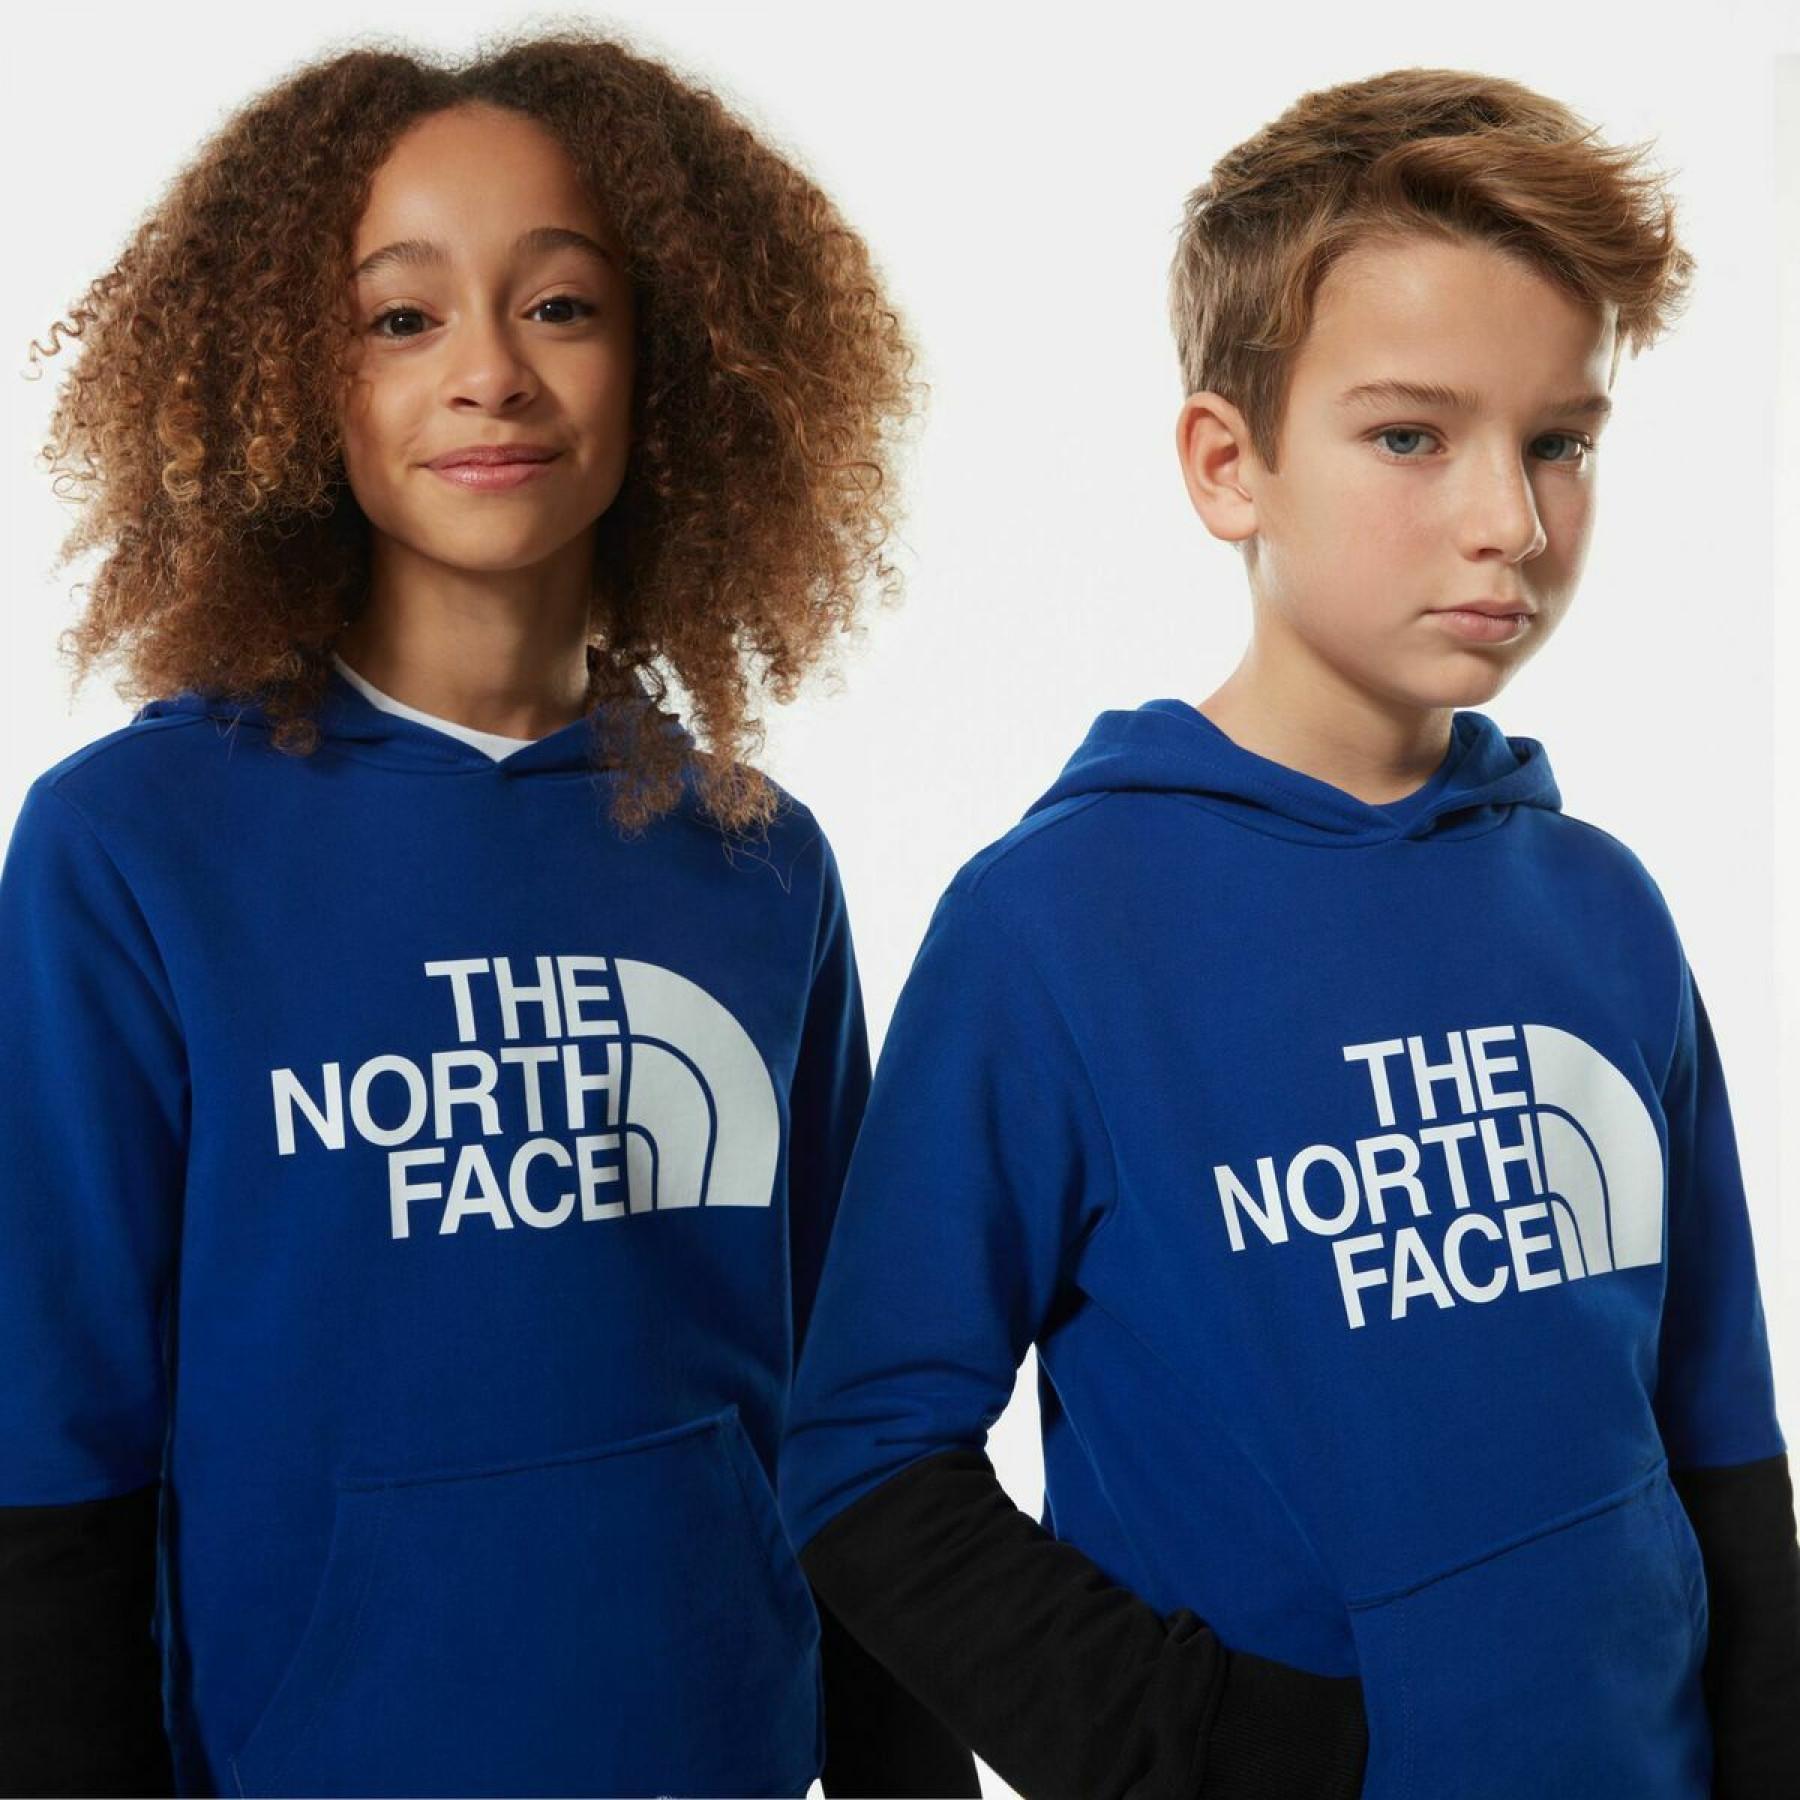 Bluza dziecięca The North Face Drew